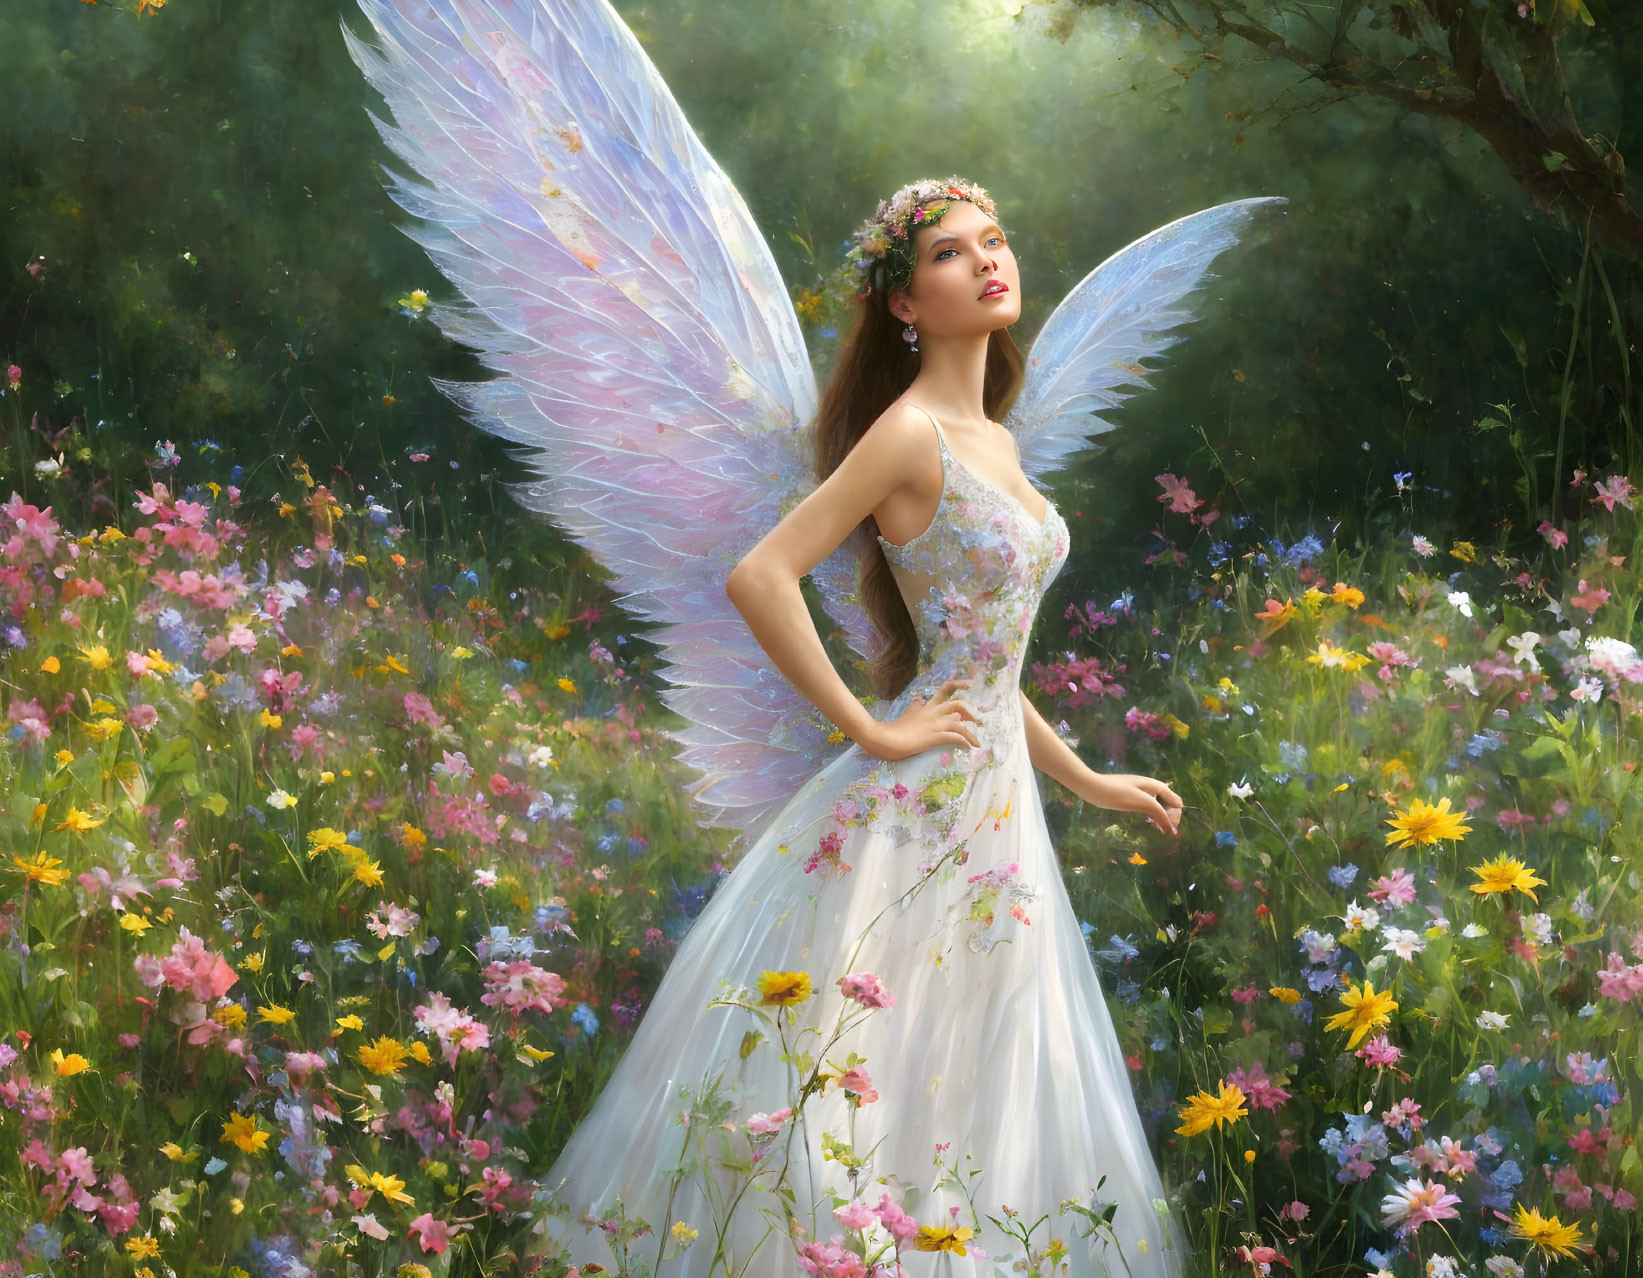 Angel in garden